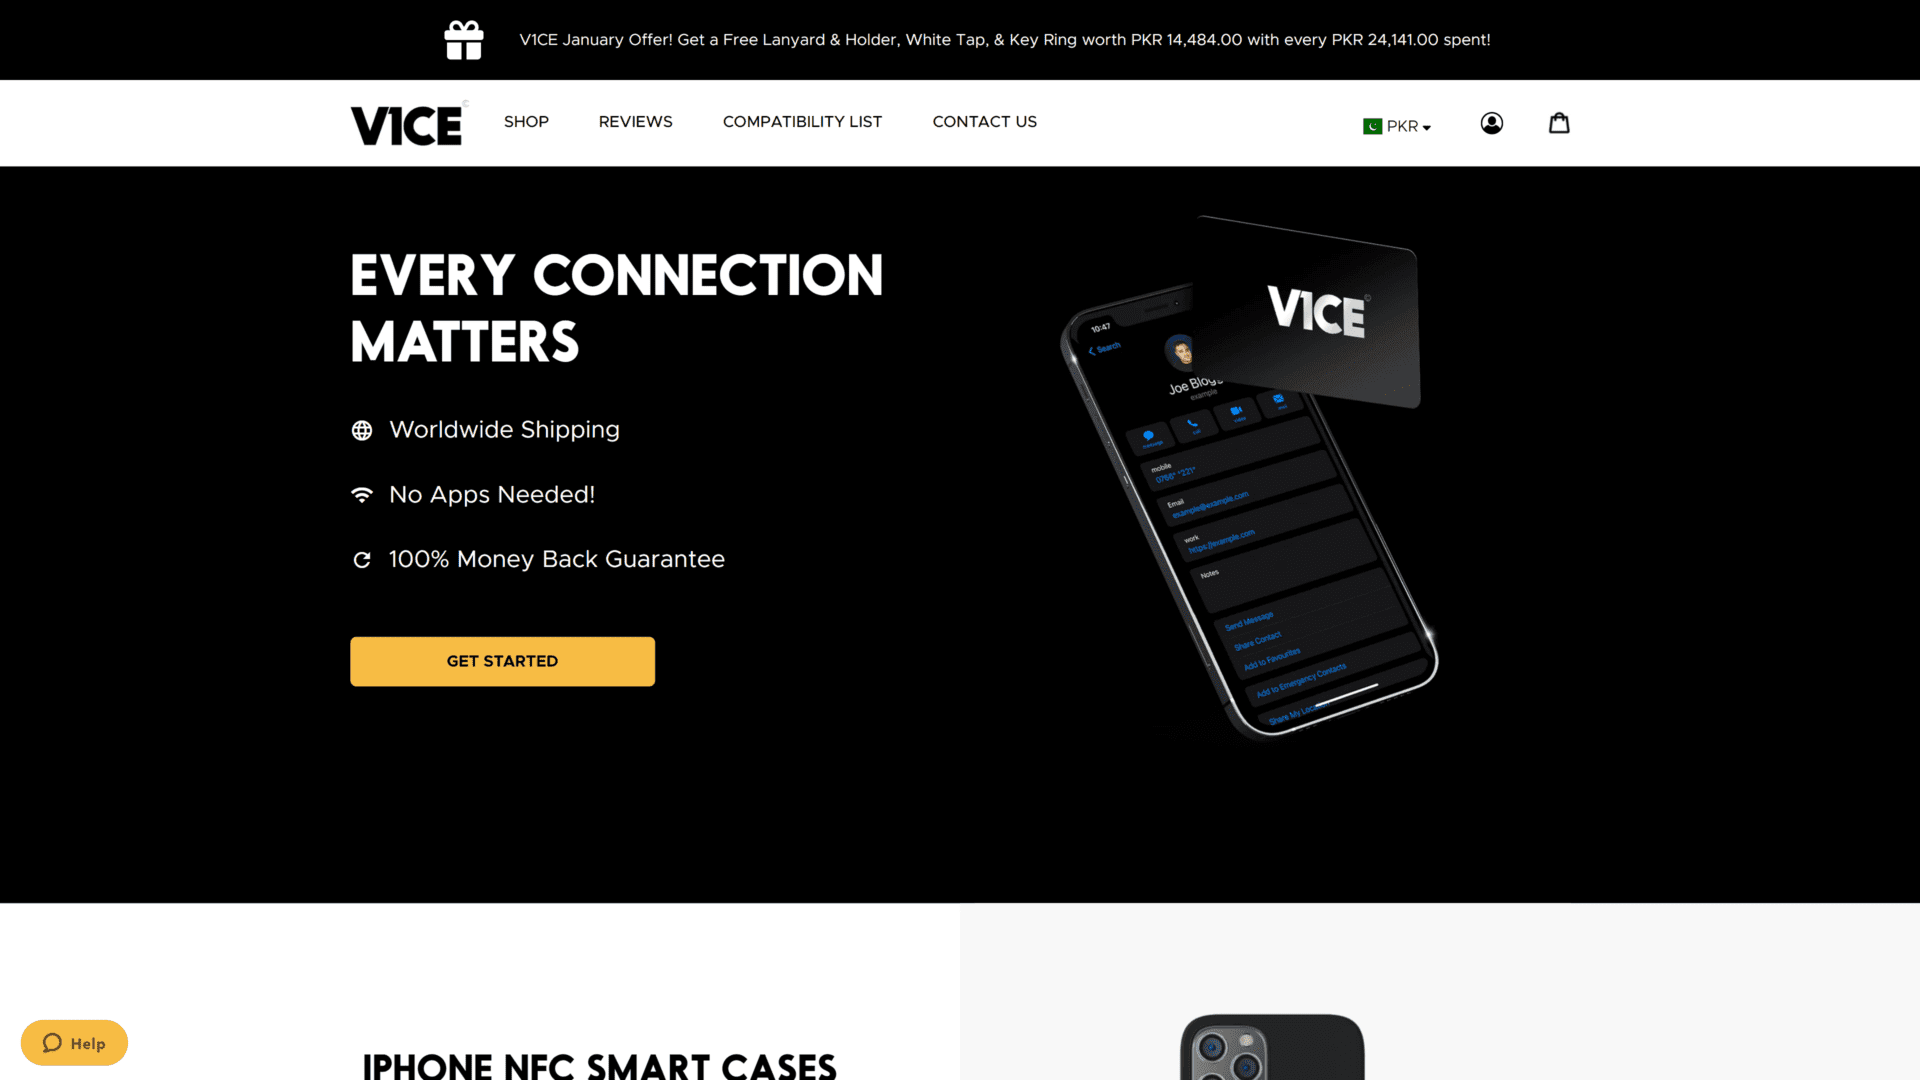 A screenshot of the v1ce homepage